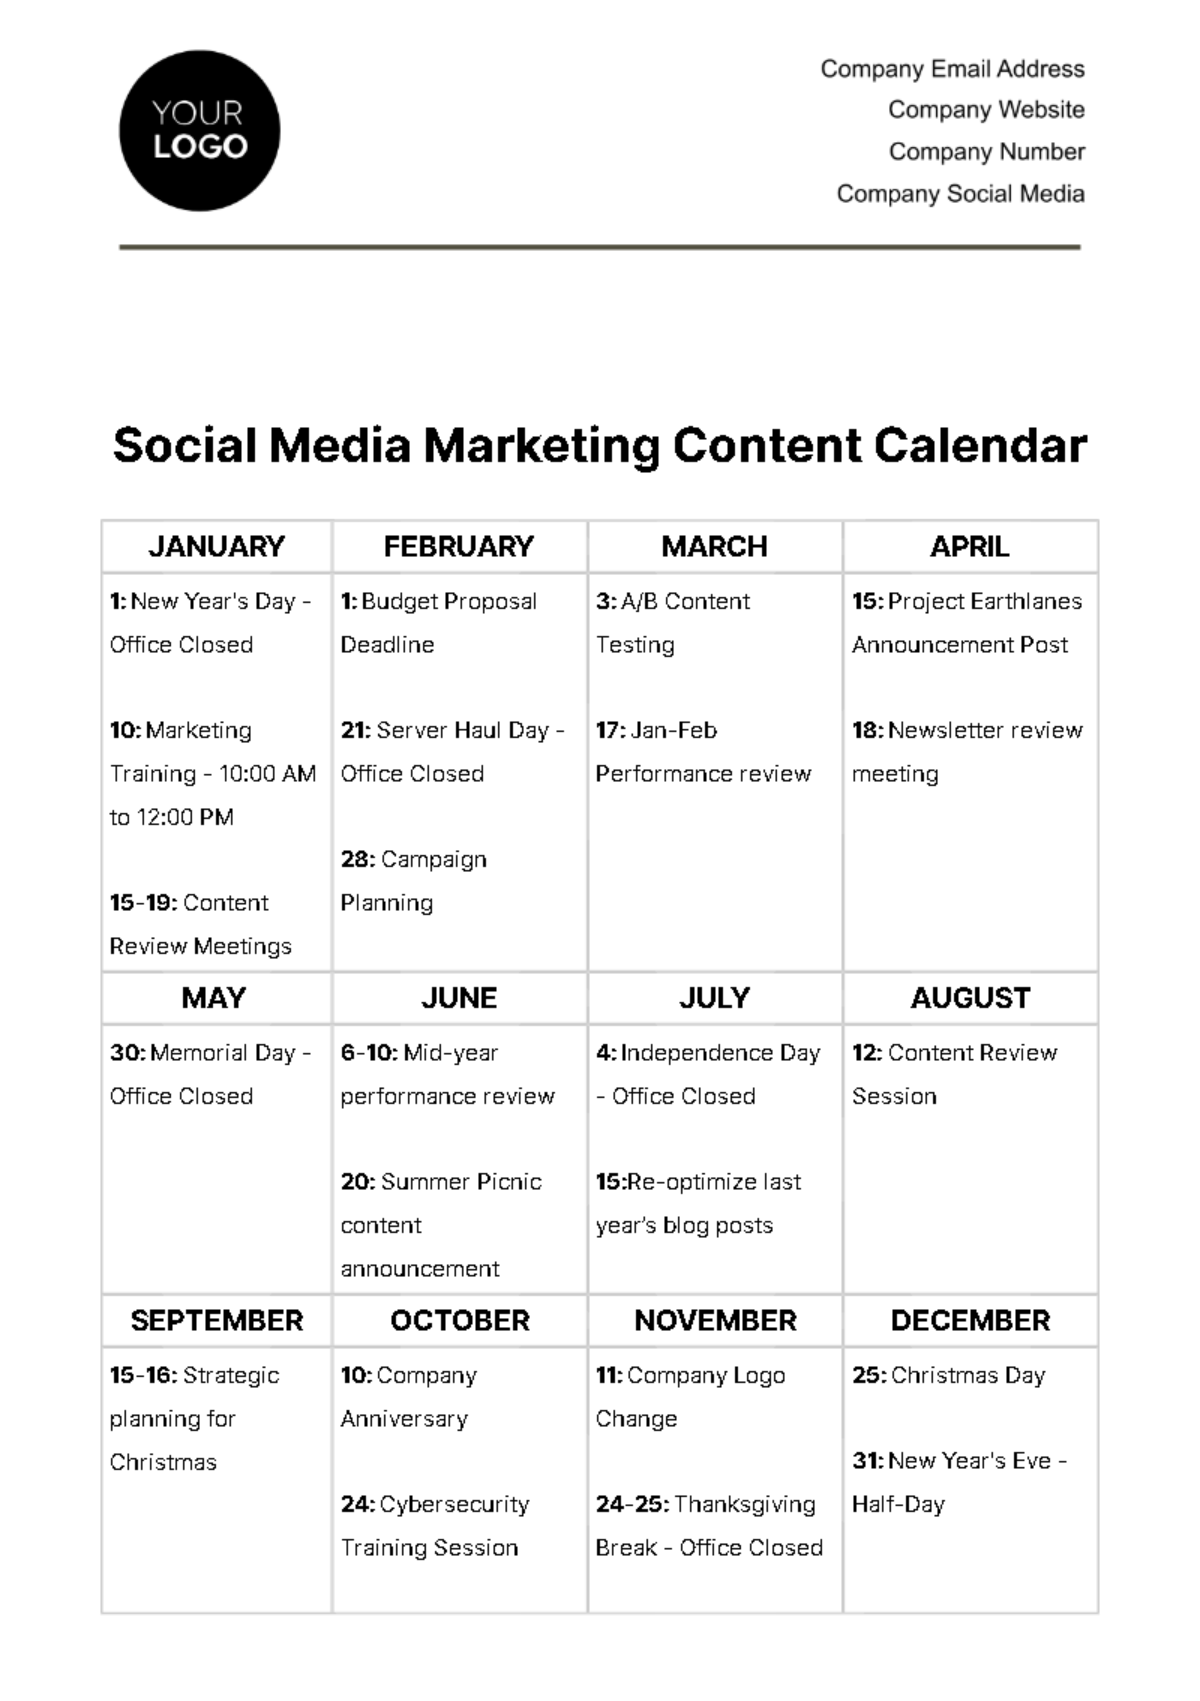 Social Media Marketing Content Calendar Schedule Template